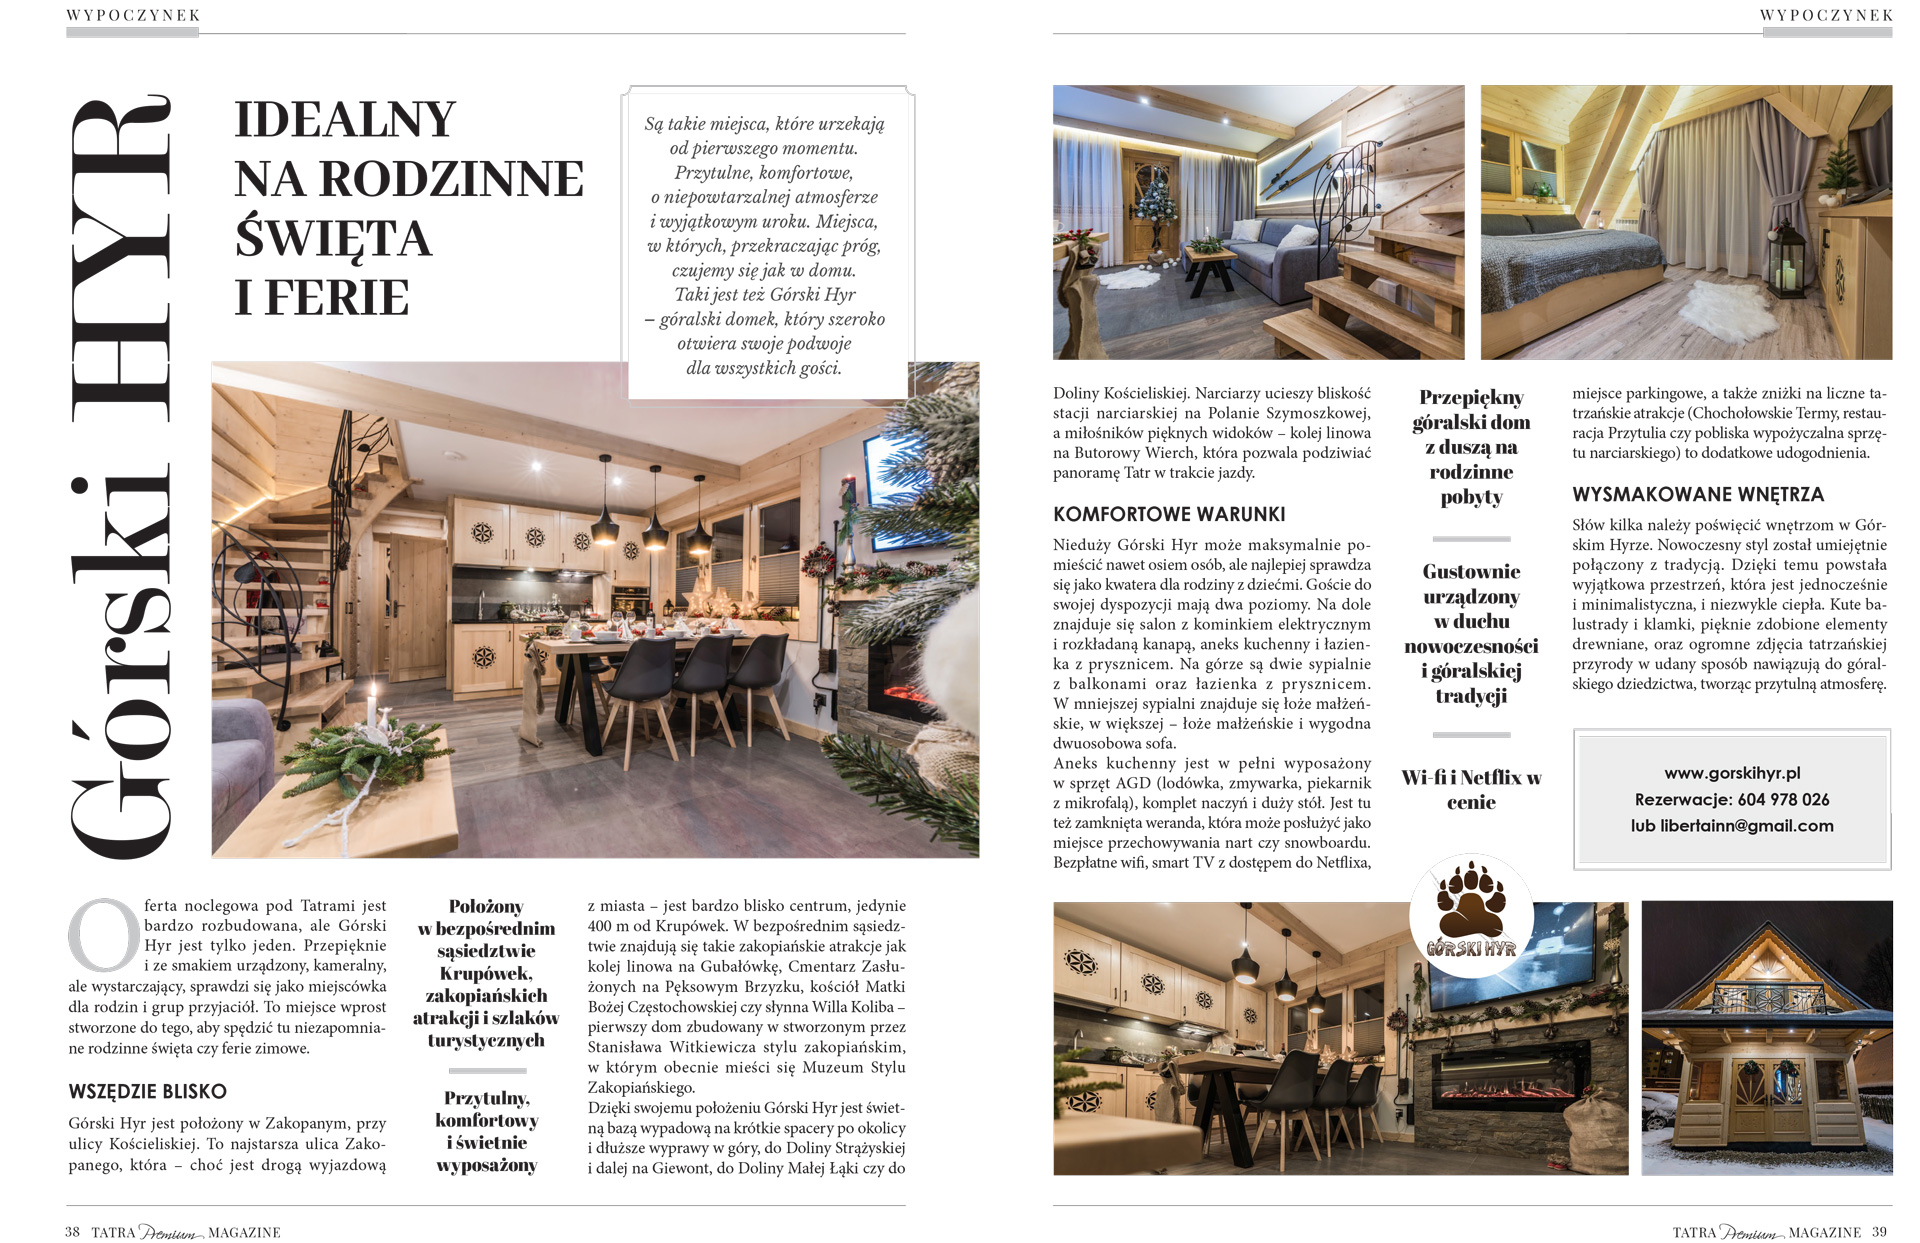 Check out Górski HYR  featured in Tatra Magazine